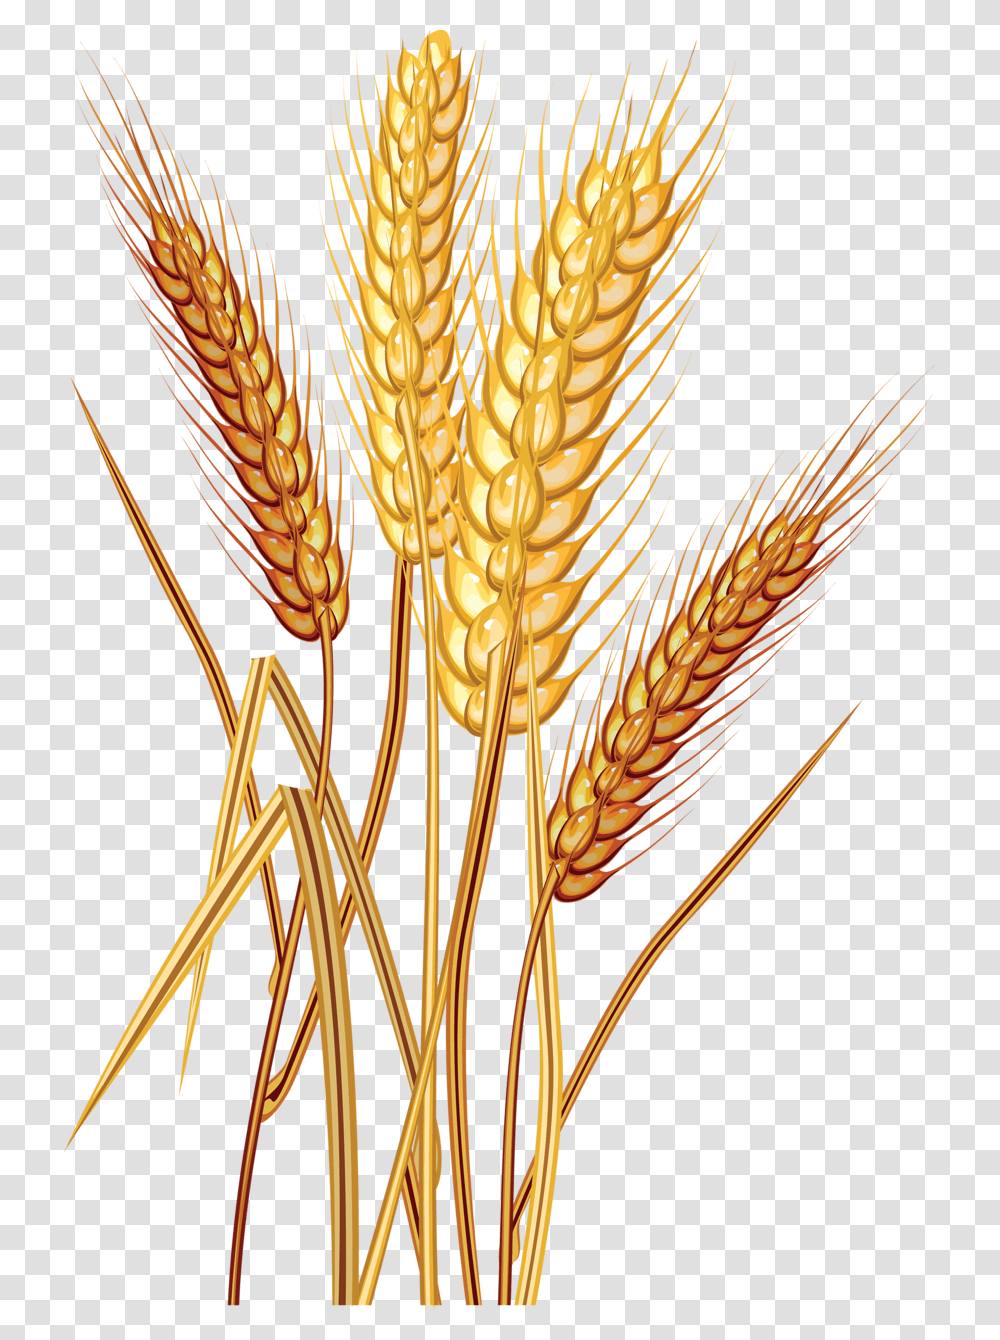 Wheat Free Images Grain Wheat Clip Art, Plant, Vegetable, Food, Produce Transparent Png